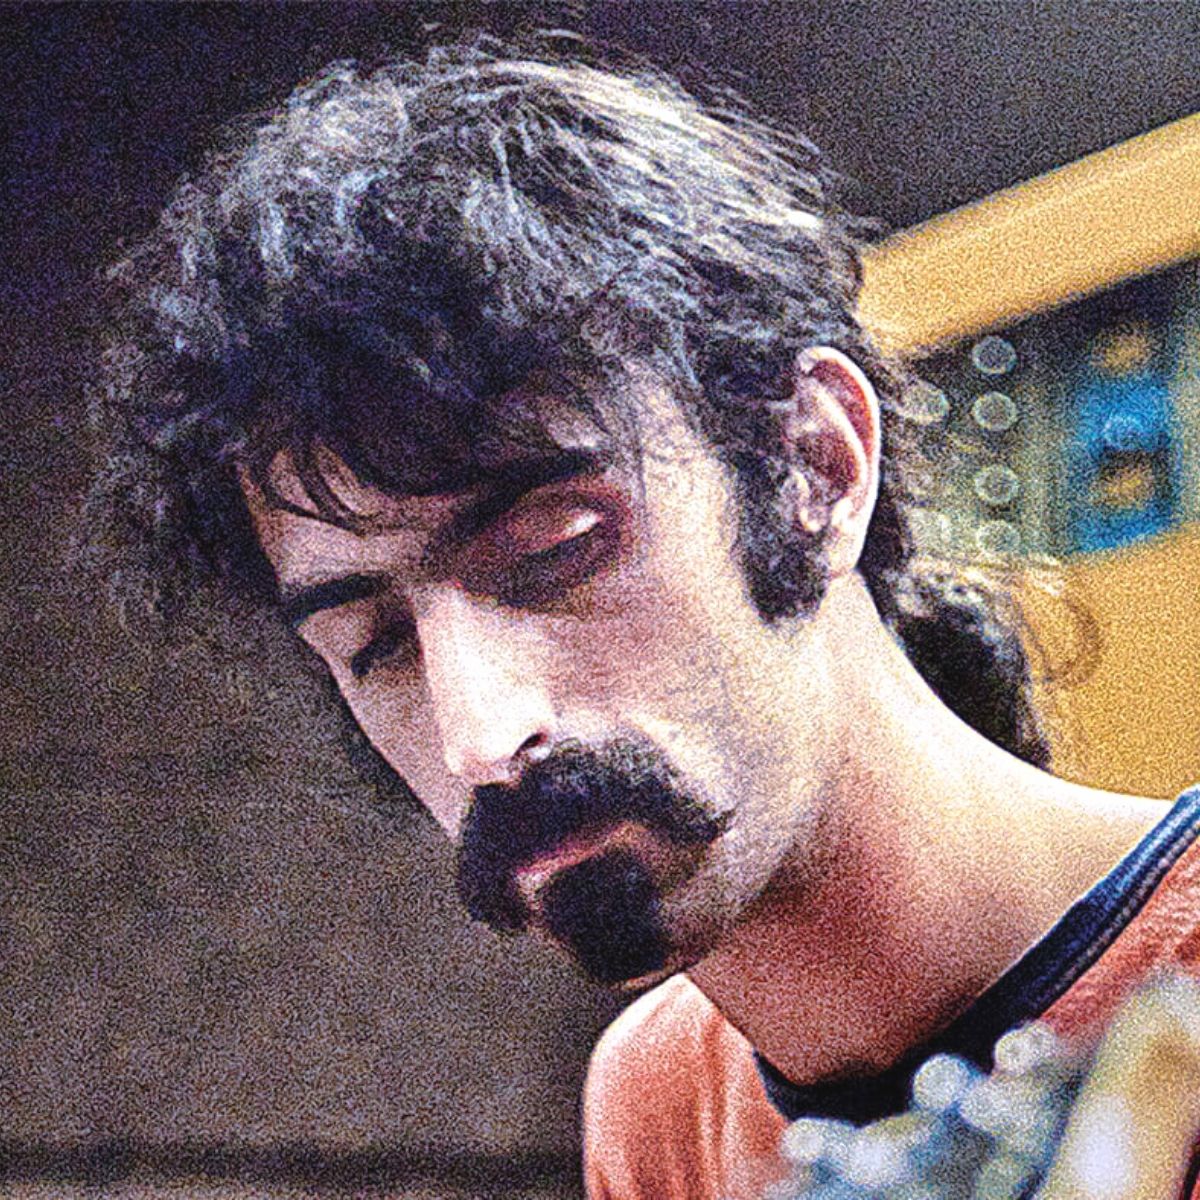 Фрэнк Заппа (Frank Zappa) на репетиции